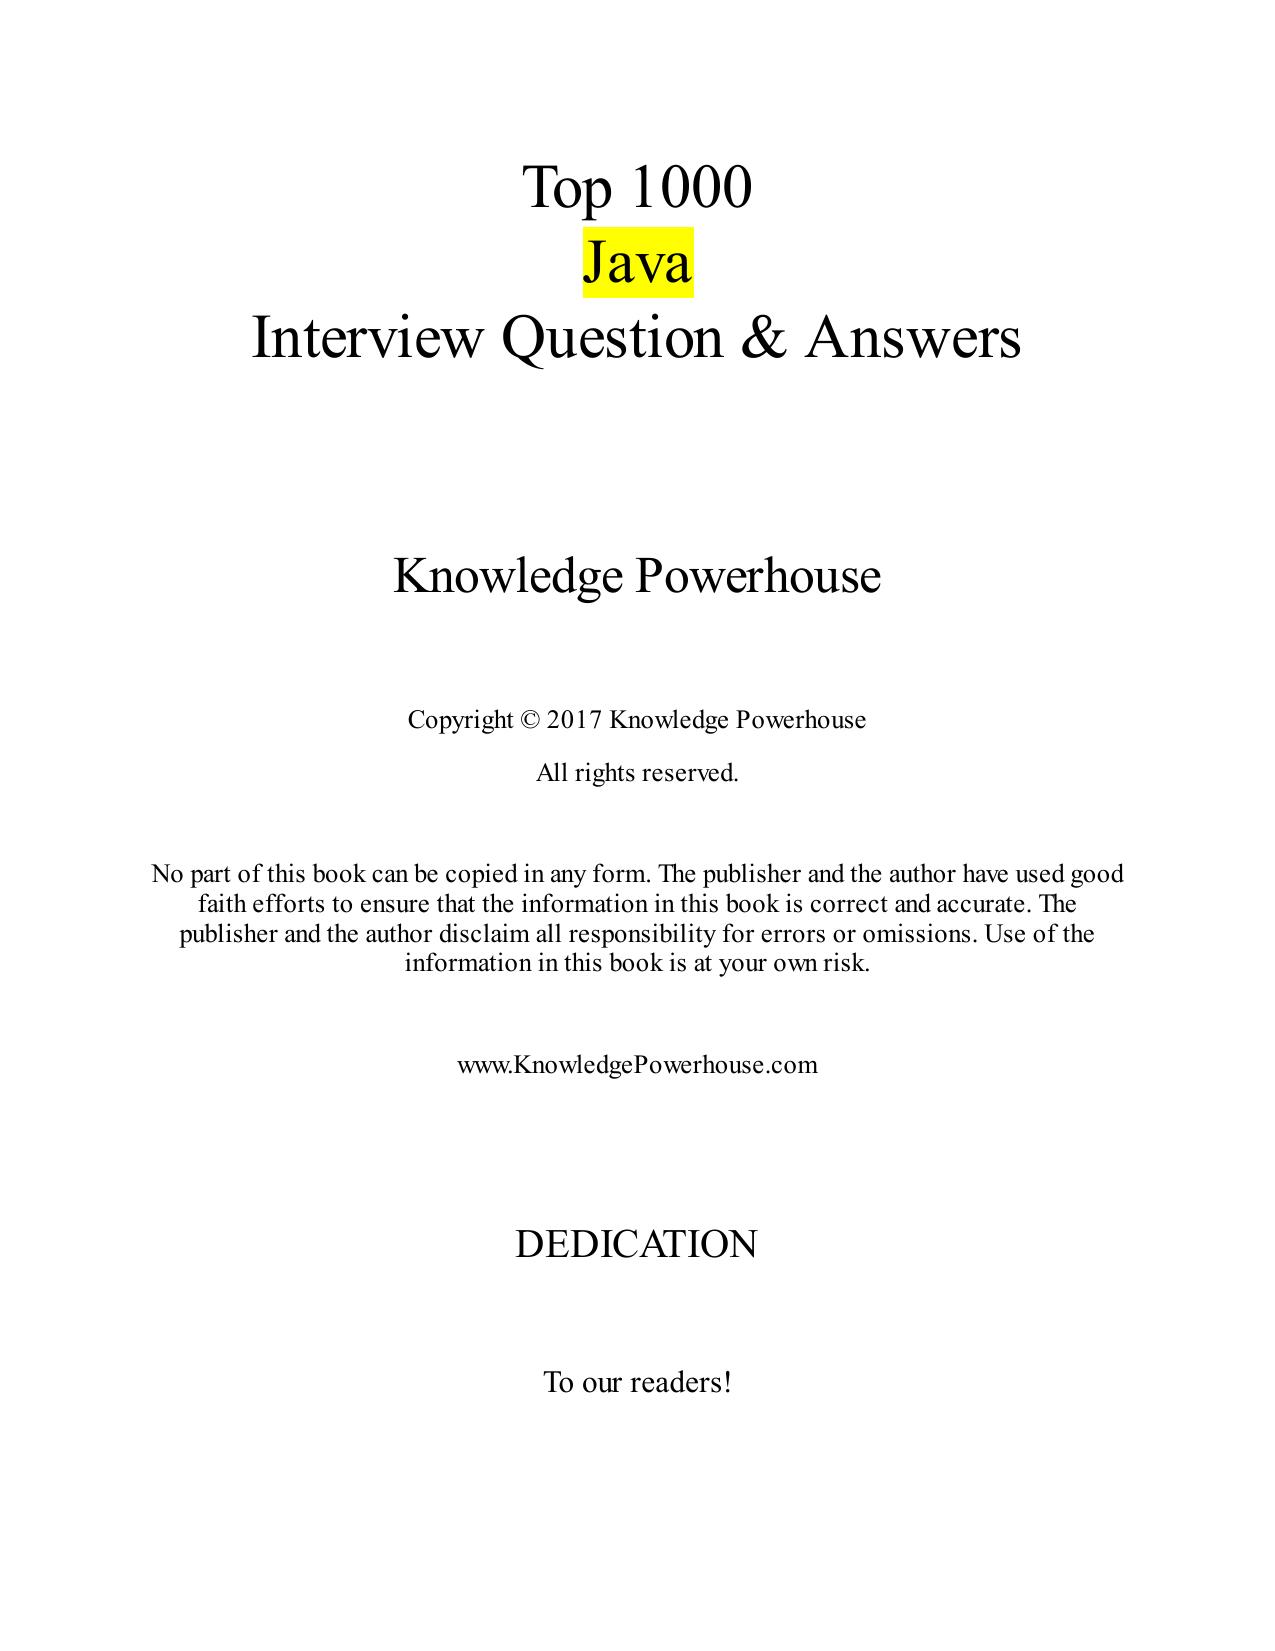 Top 1000 Java Interview Questions: Includes Spring, Hibernate, Microservices, GIT, Maven, JSP, AWS, Cloud Computing